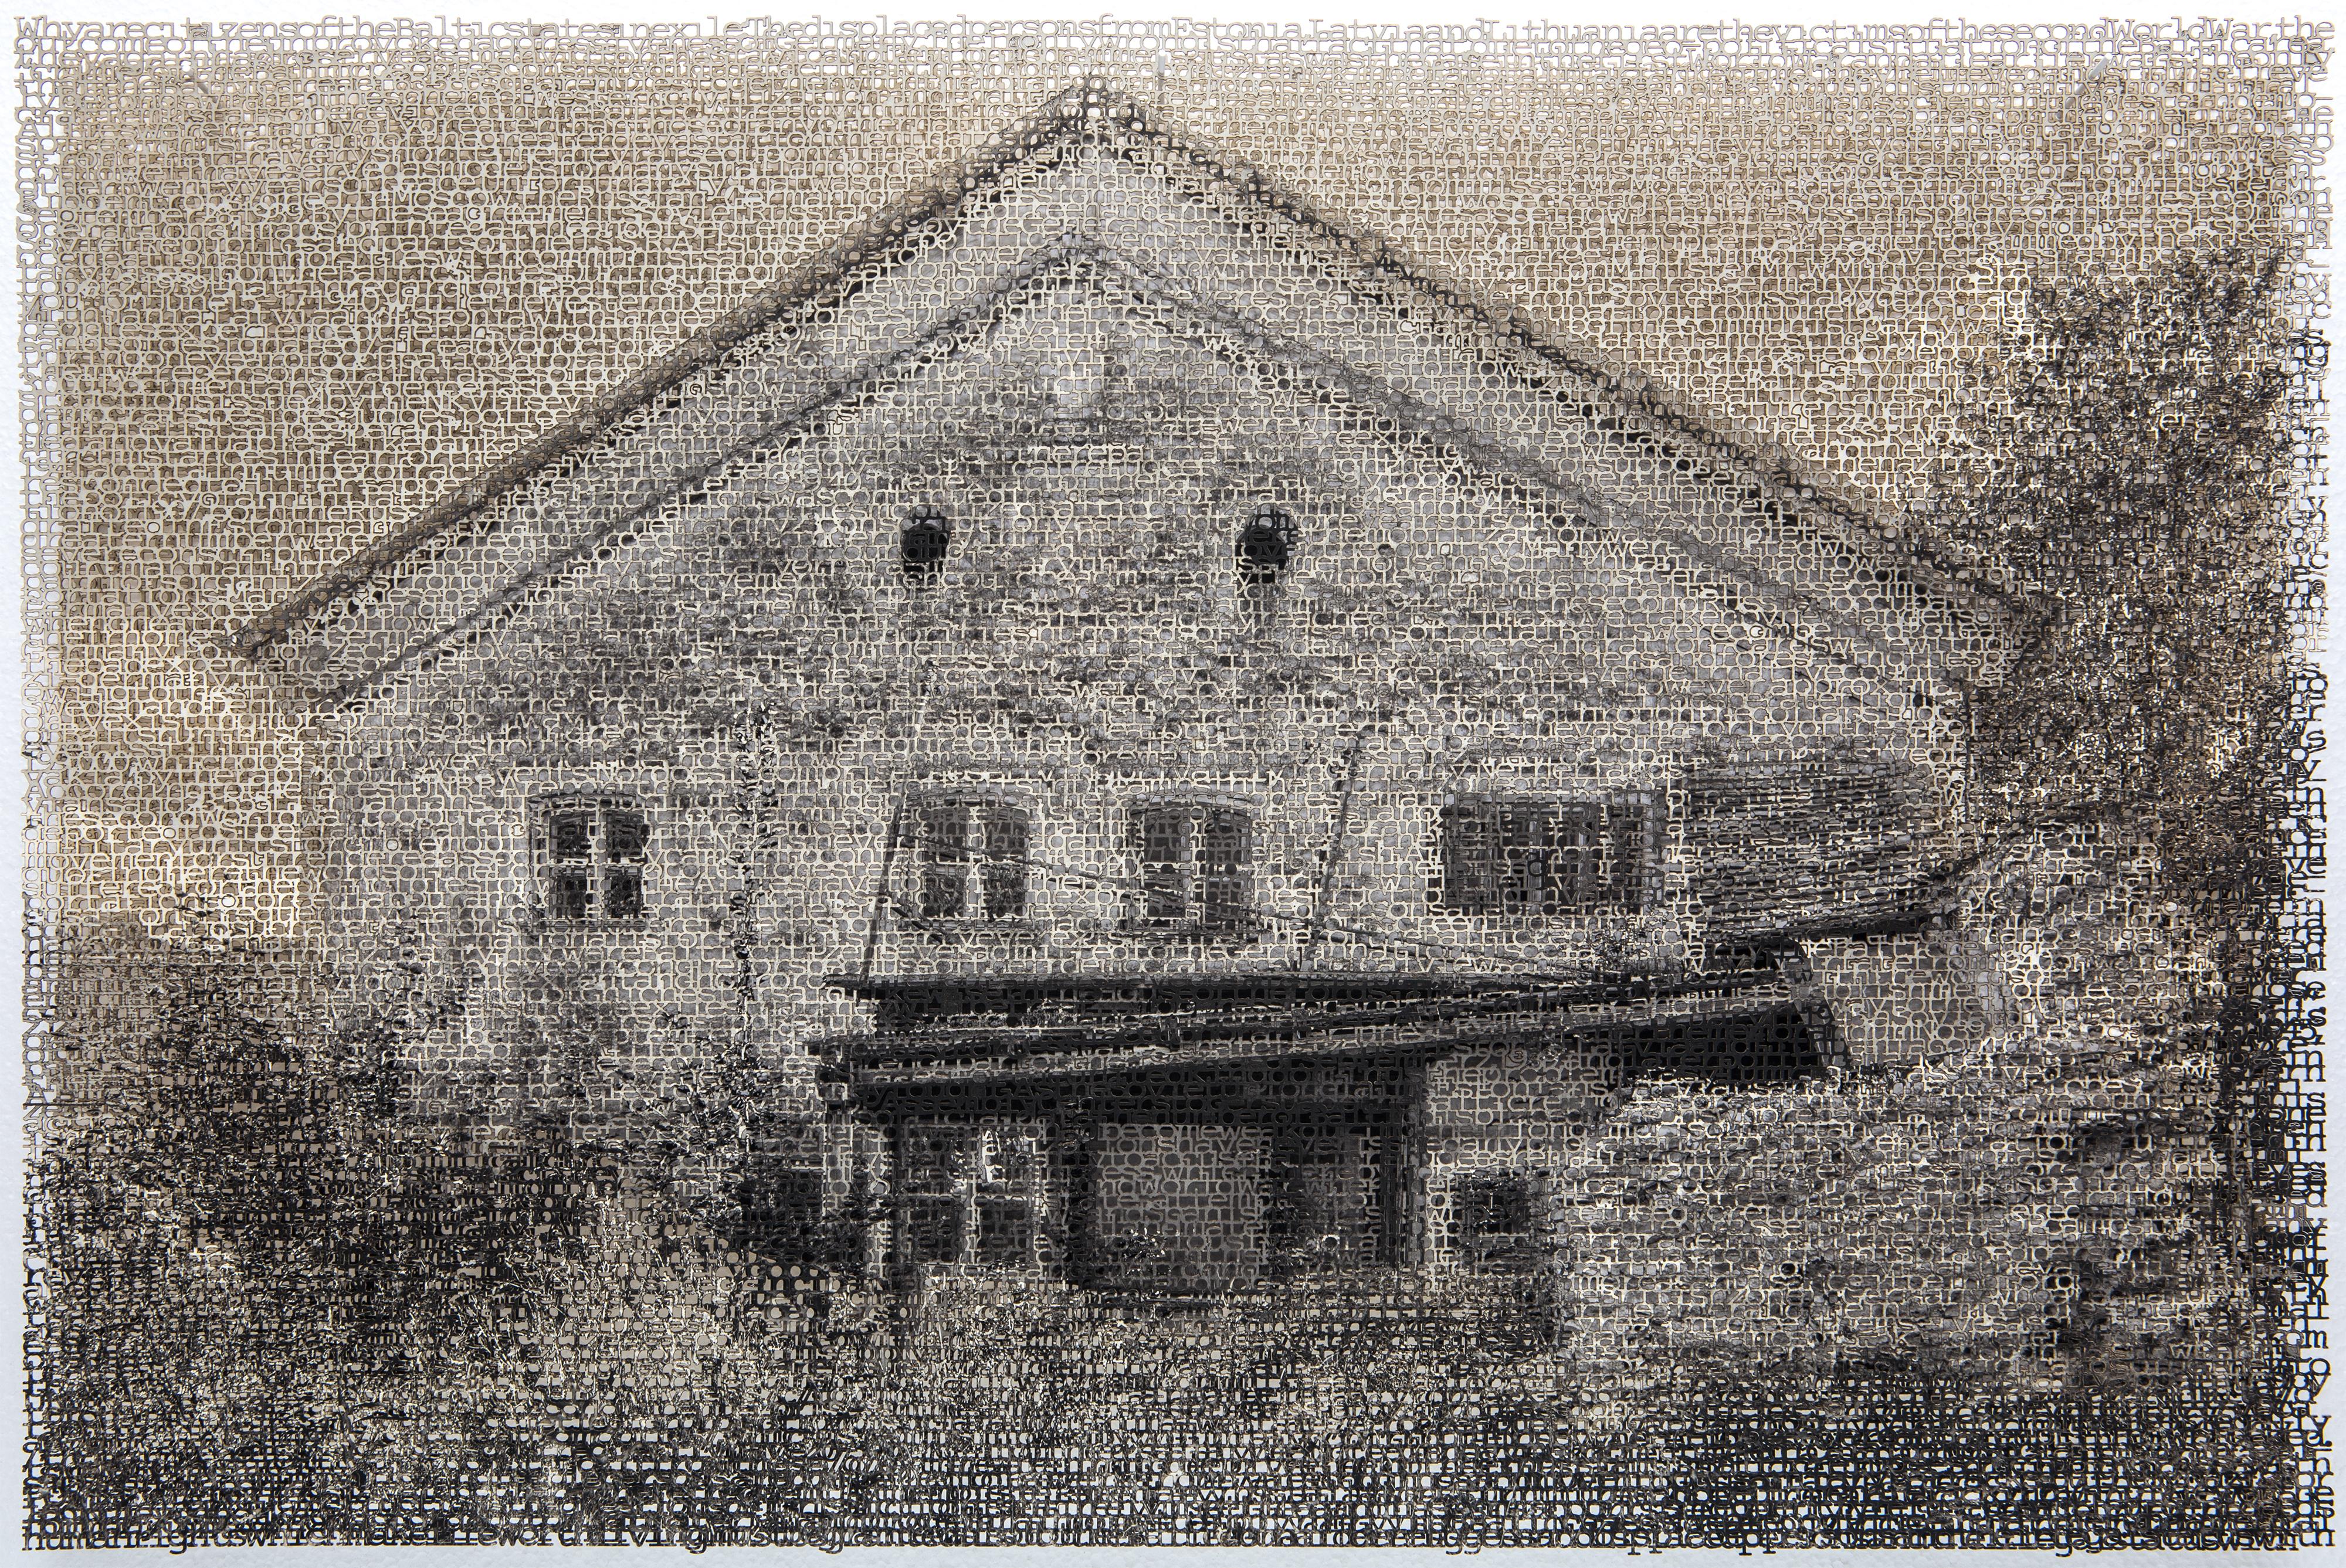 Krista Svalbonas Black and White Photograph - Eichstatt 1, Laser cut archival pigment ink print, signed, numbered, framed 